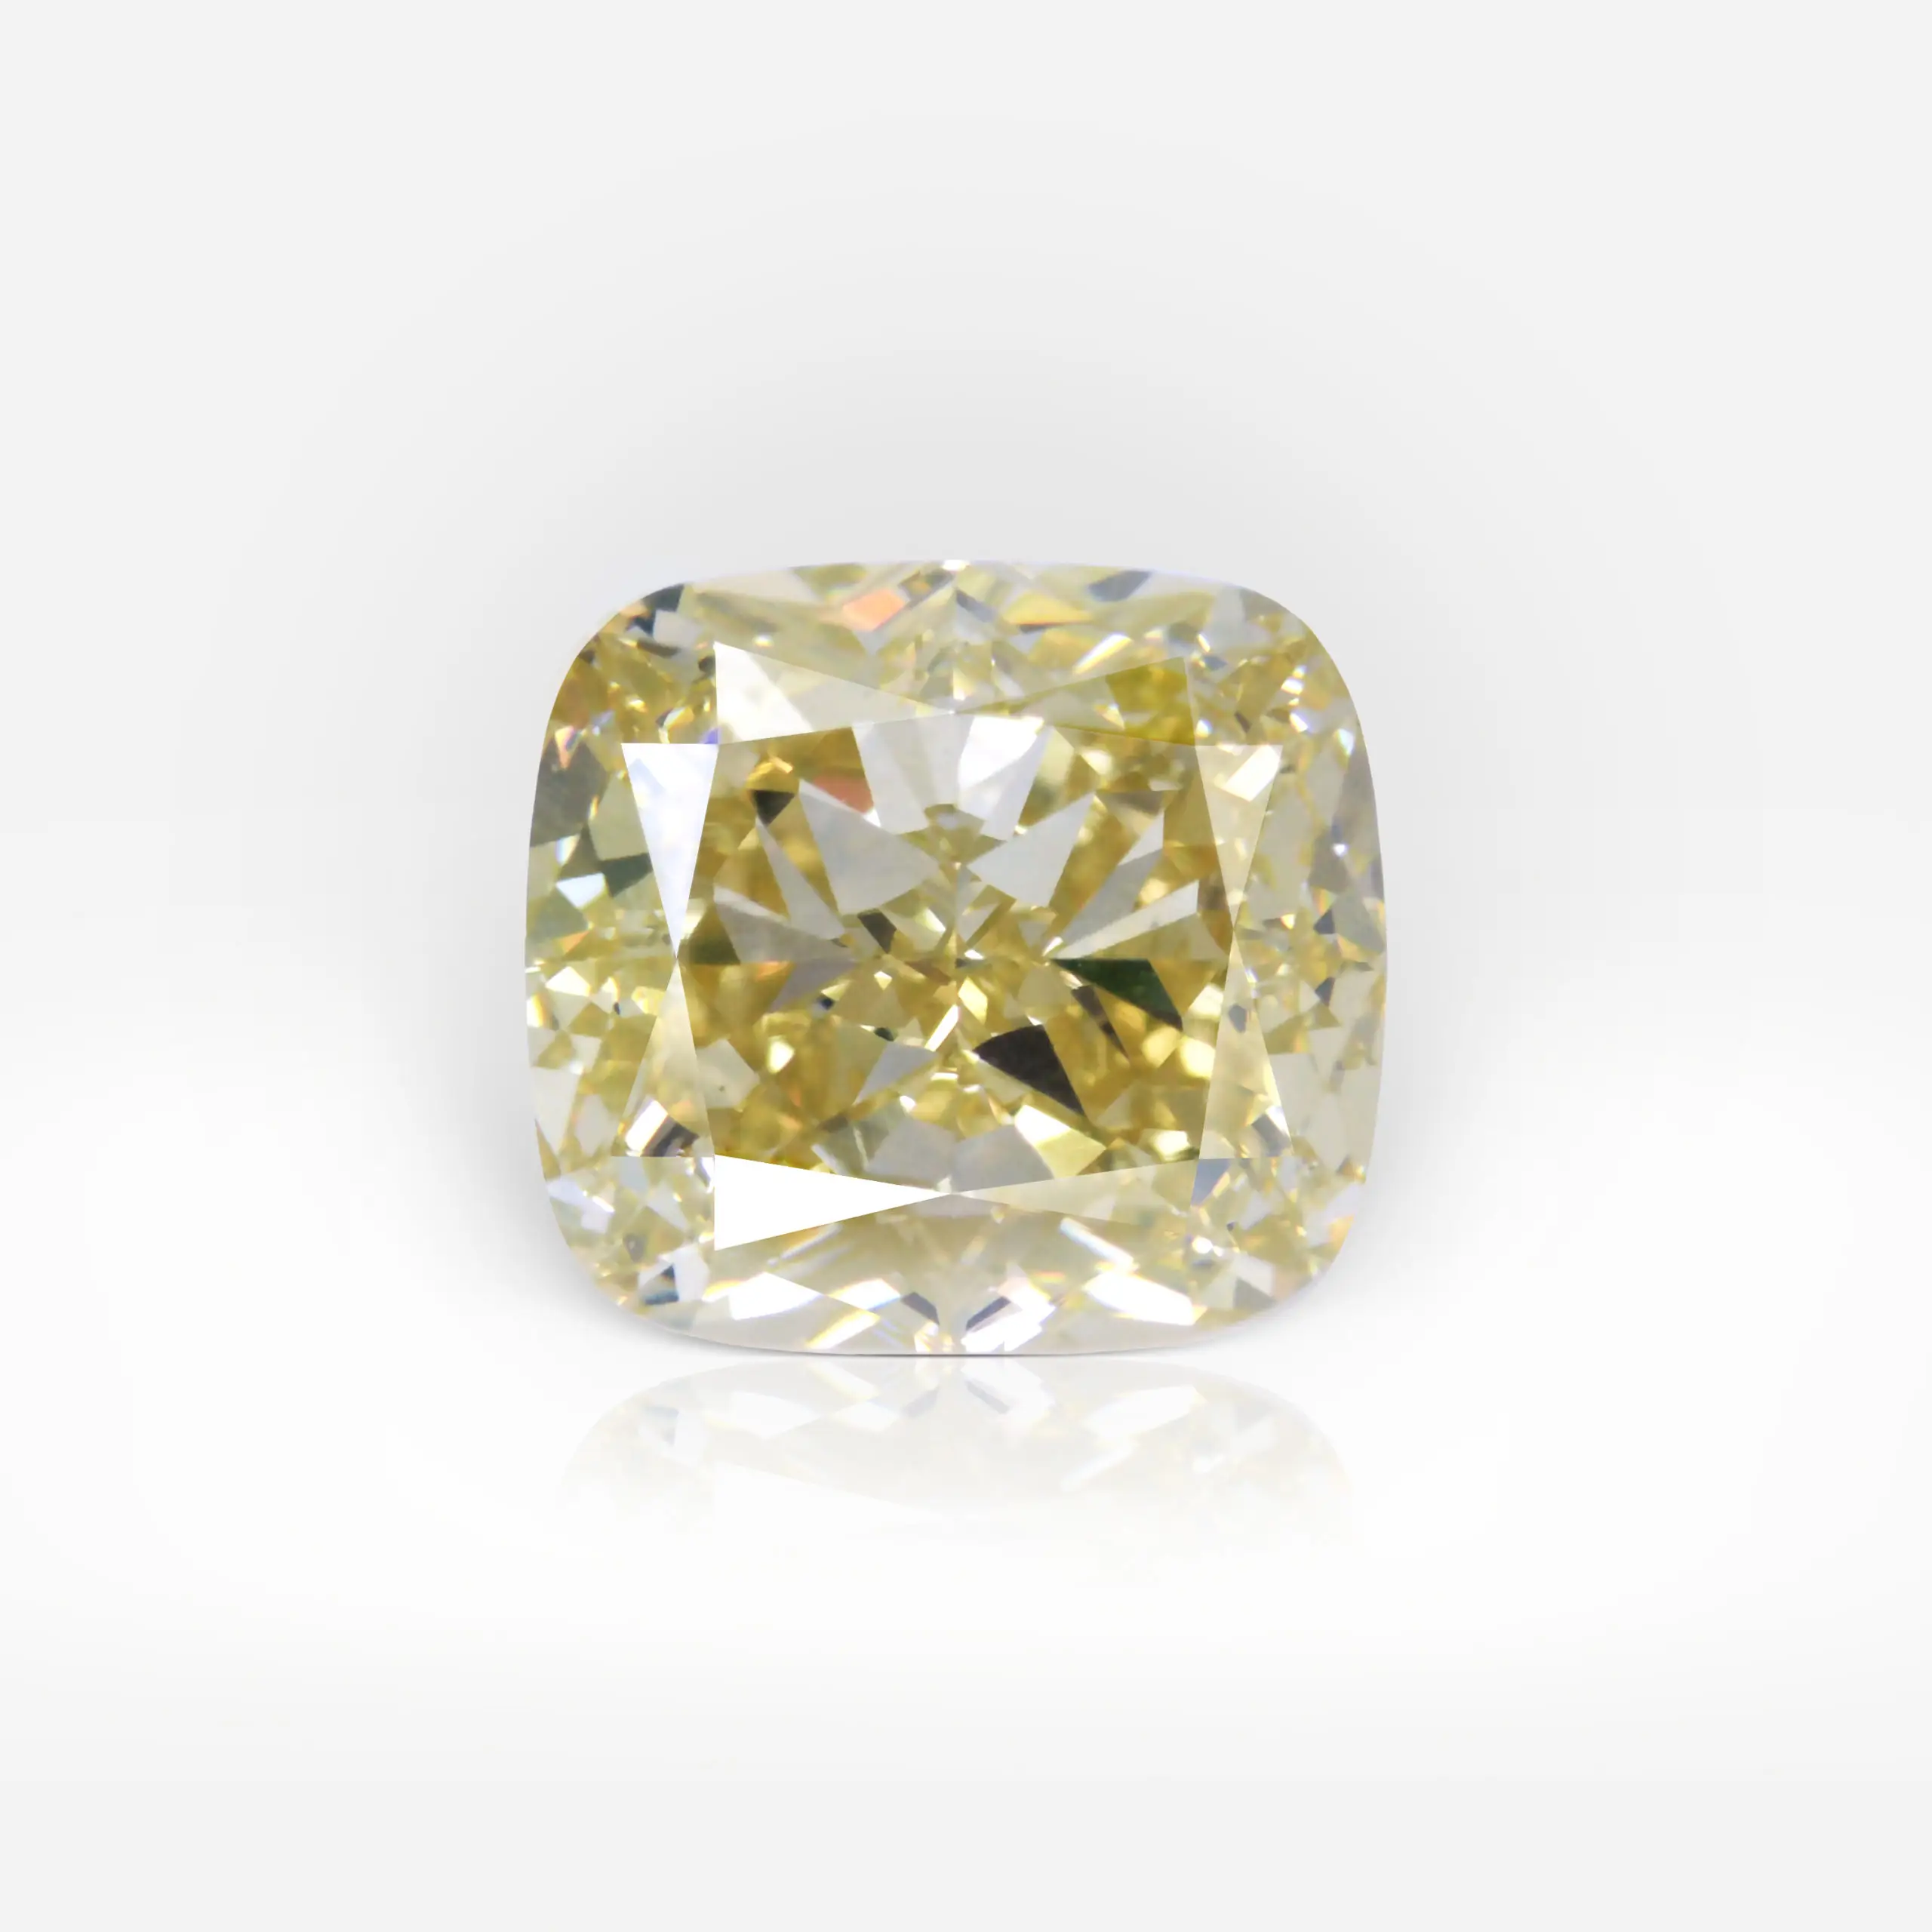 4.56 carat Fancy Orangy Yellow VS2 Cushion Shape Diamond GIA - picture 1